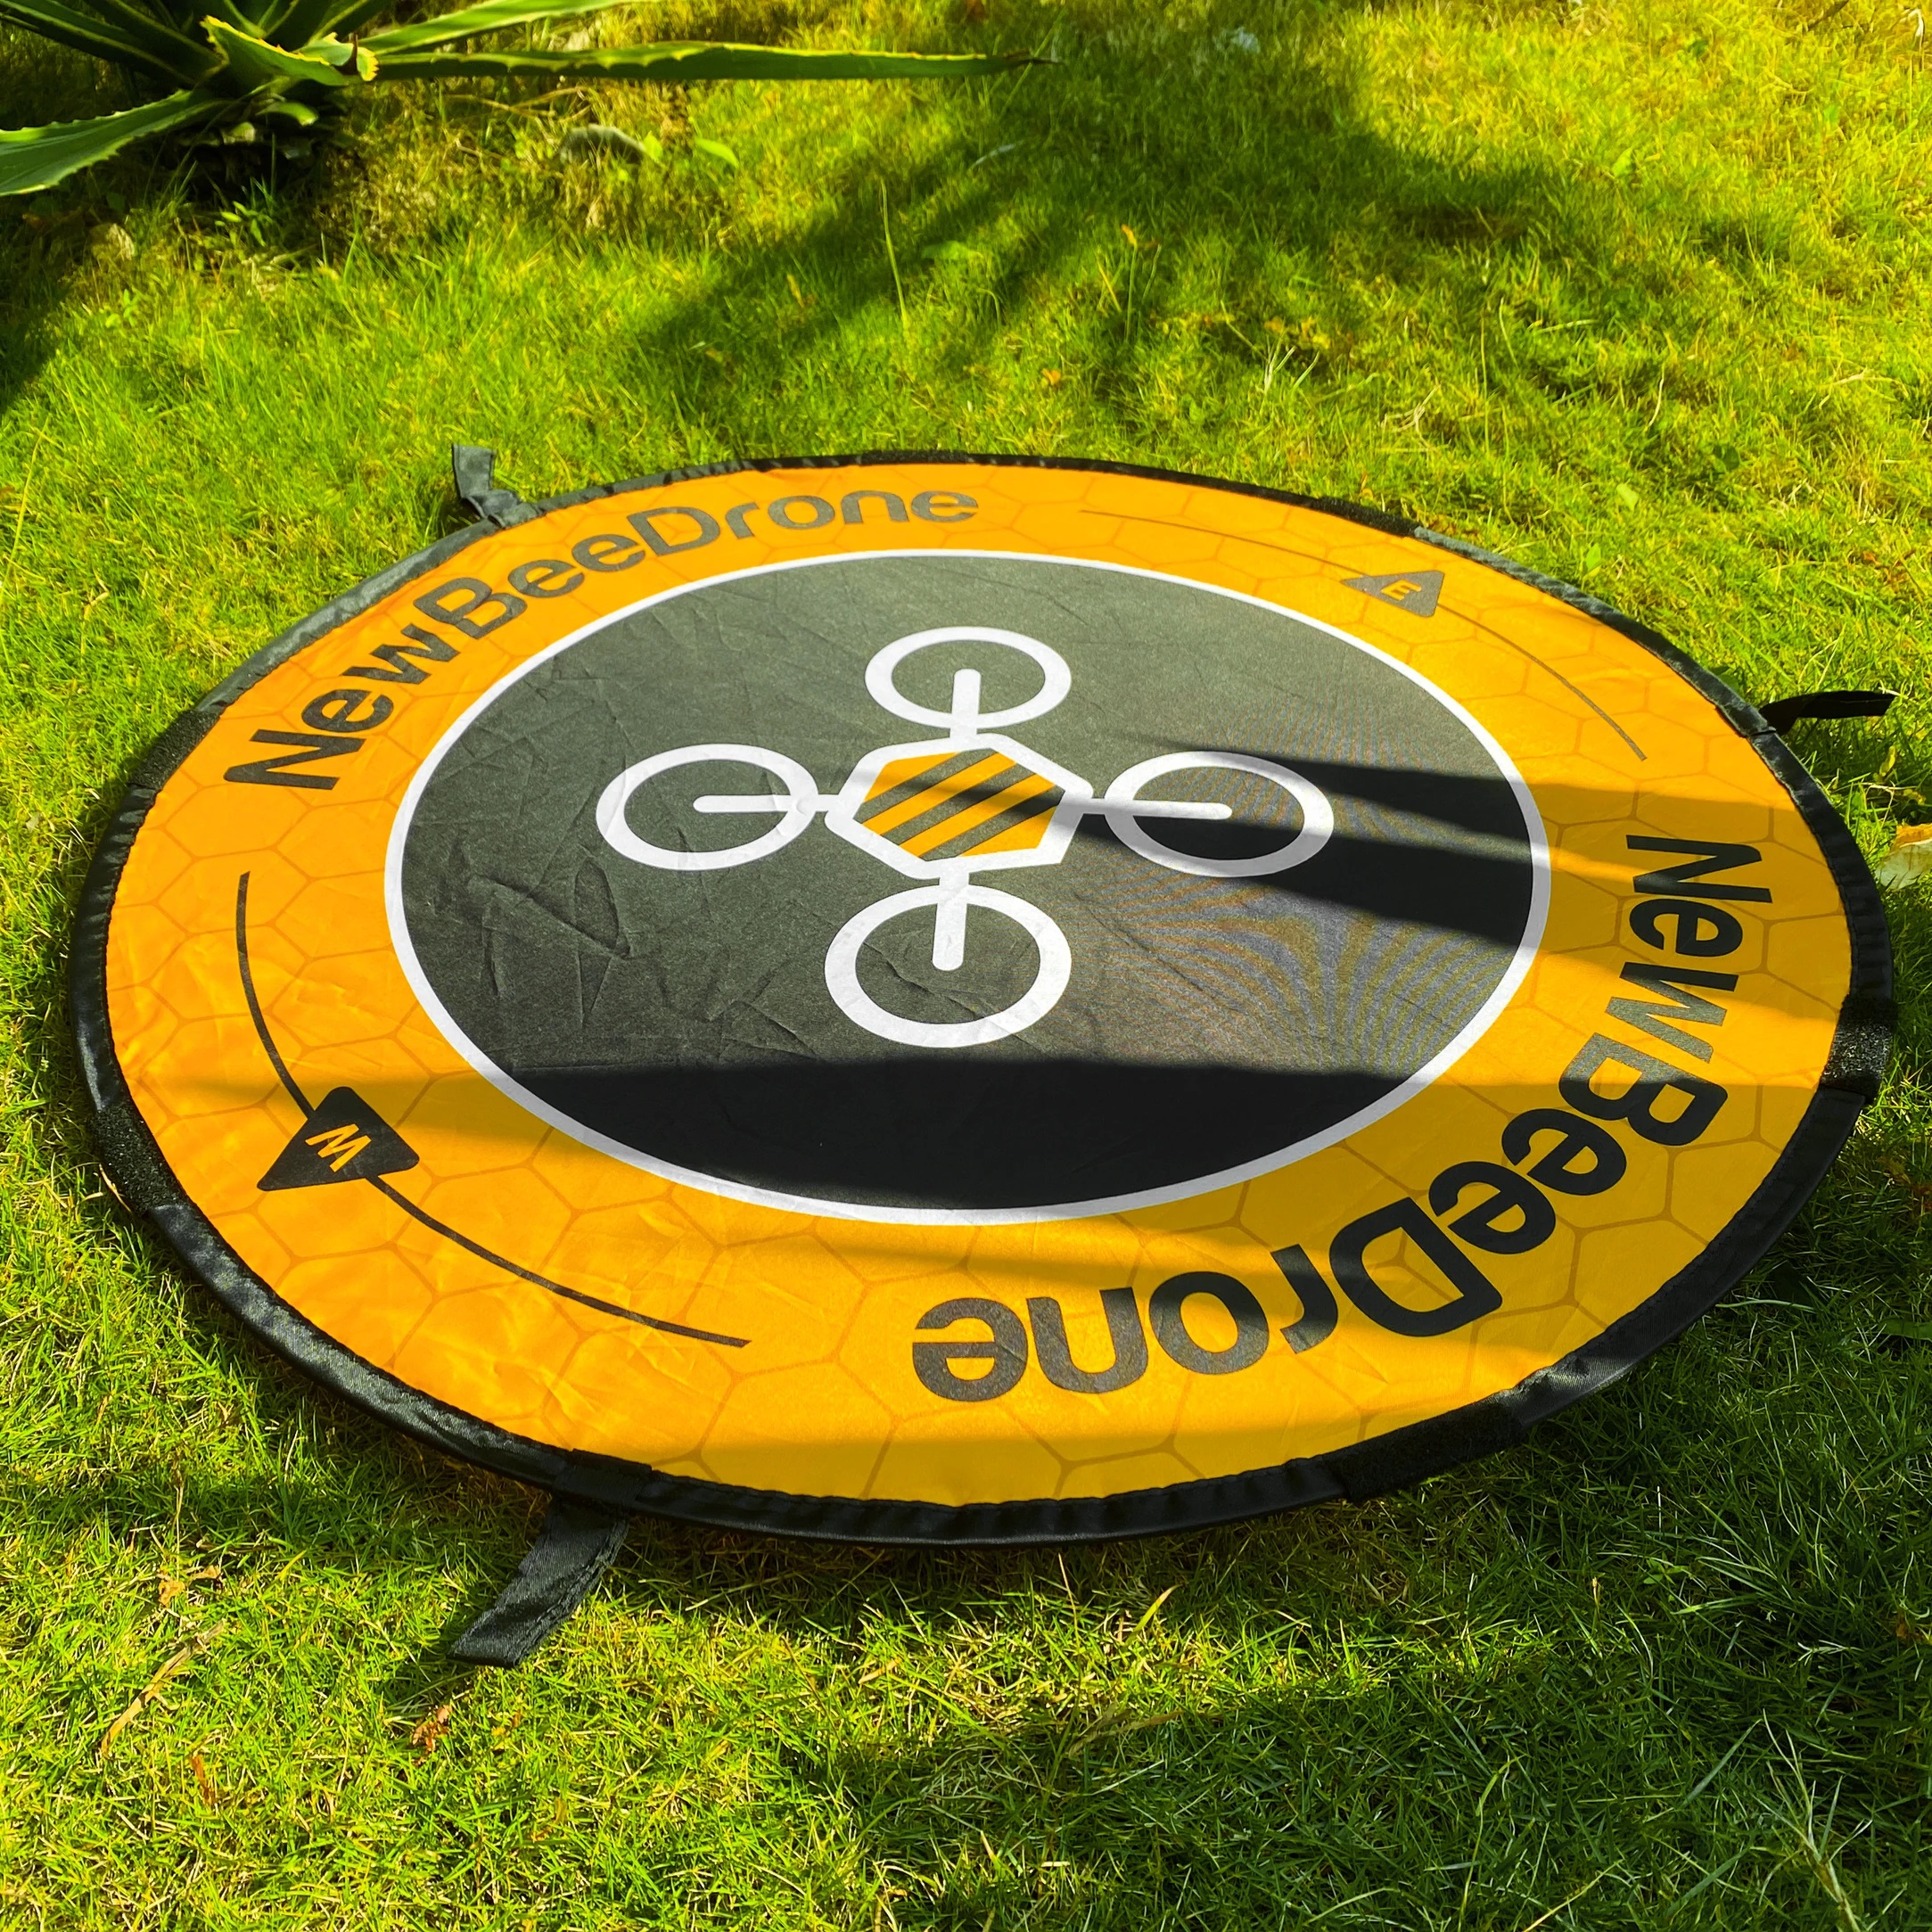 New Bee Drone landing Pad XL